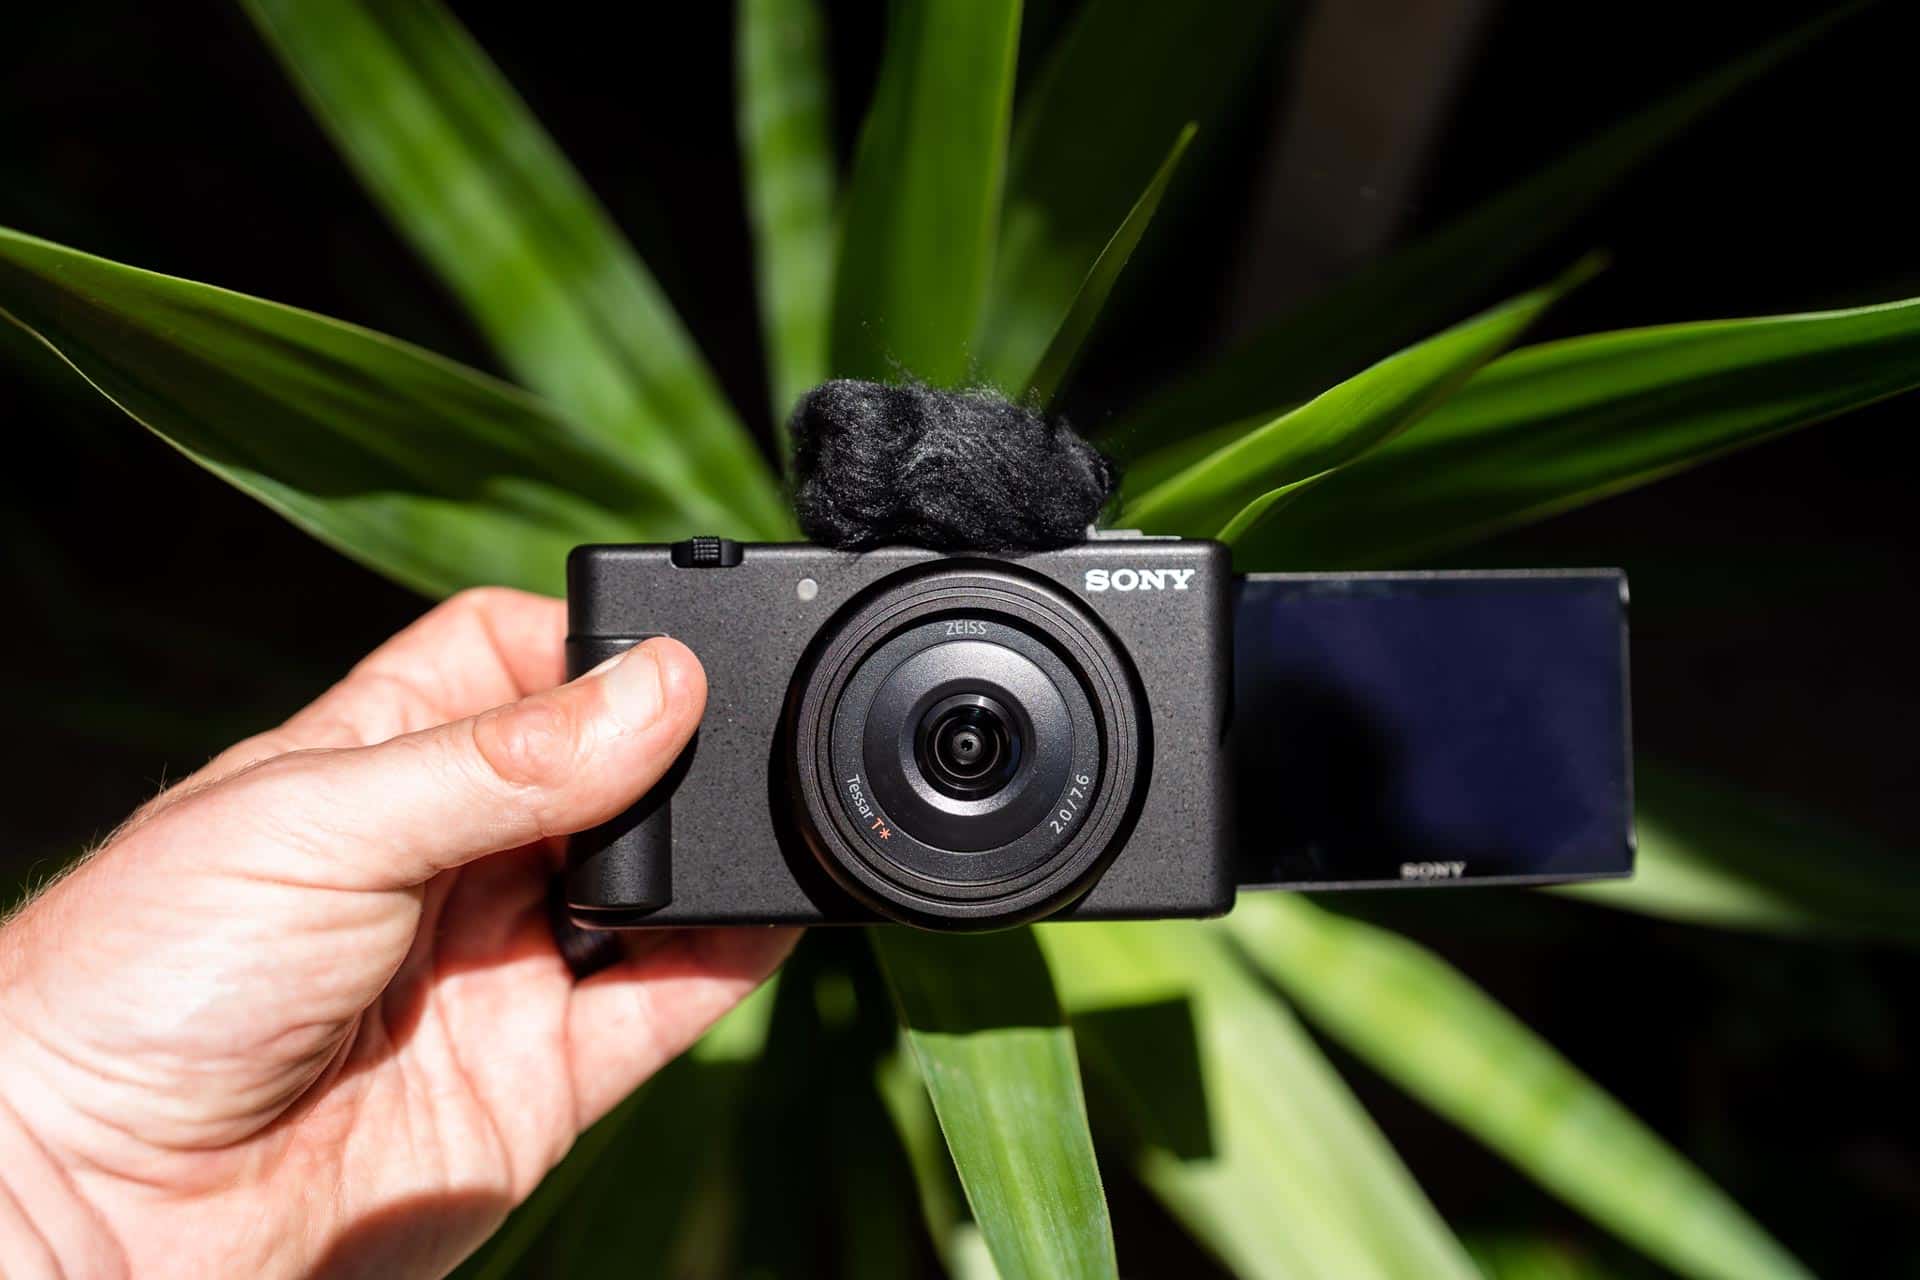 Introducing vlog camera ZV-1F | Sony